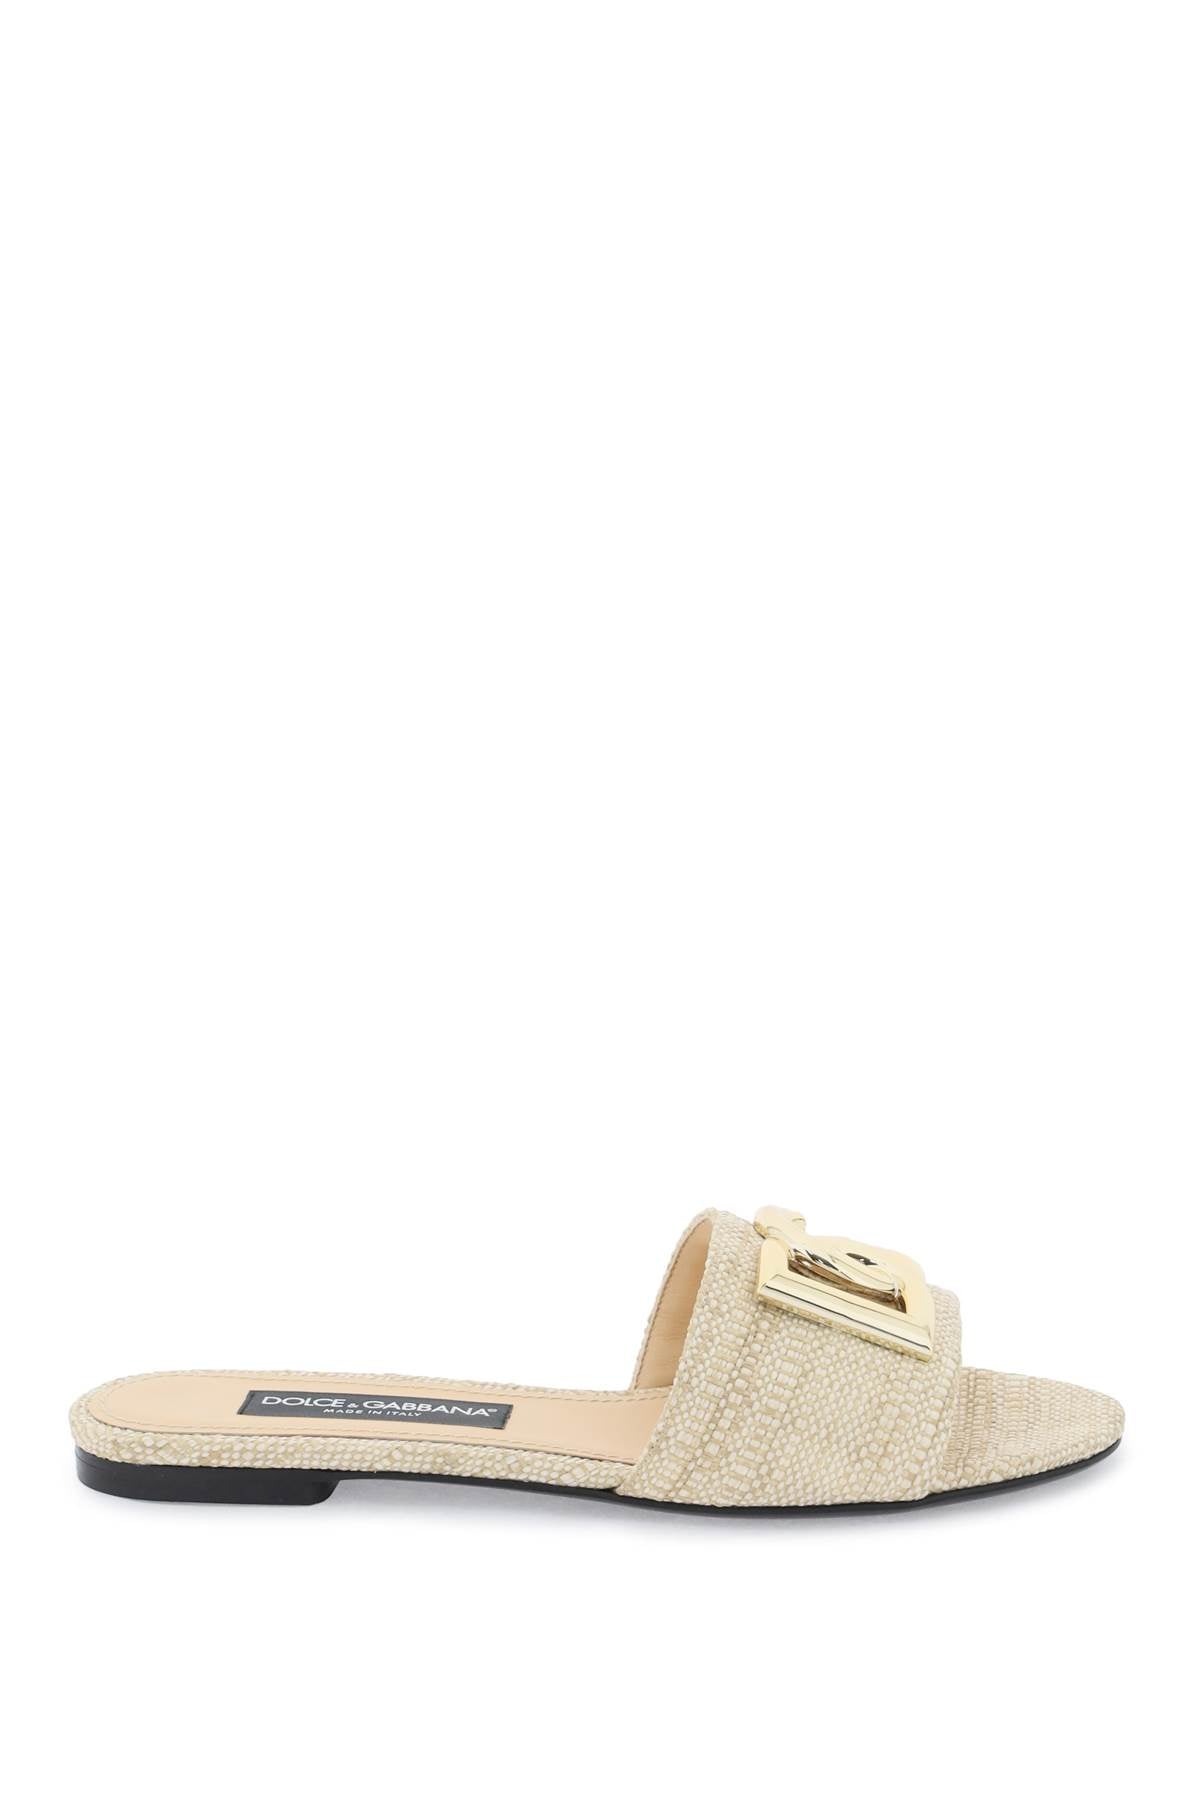 DOLCE & GABBANA Luxurious DG Logo Slide Sandals in Sabbia for Women - SS24 Collection